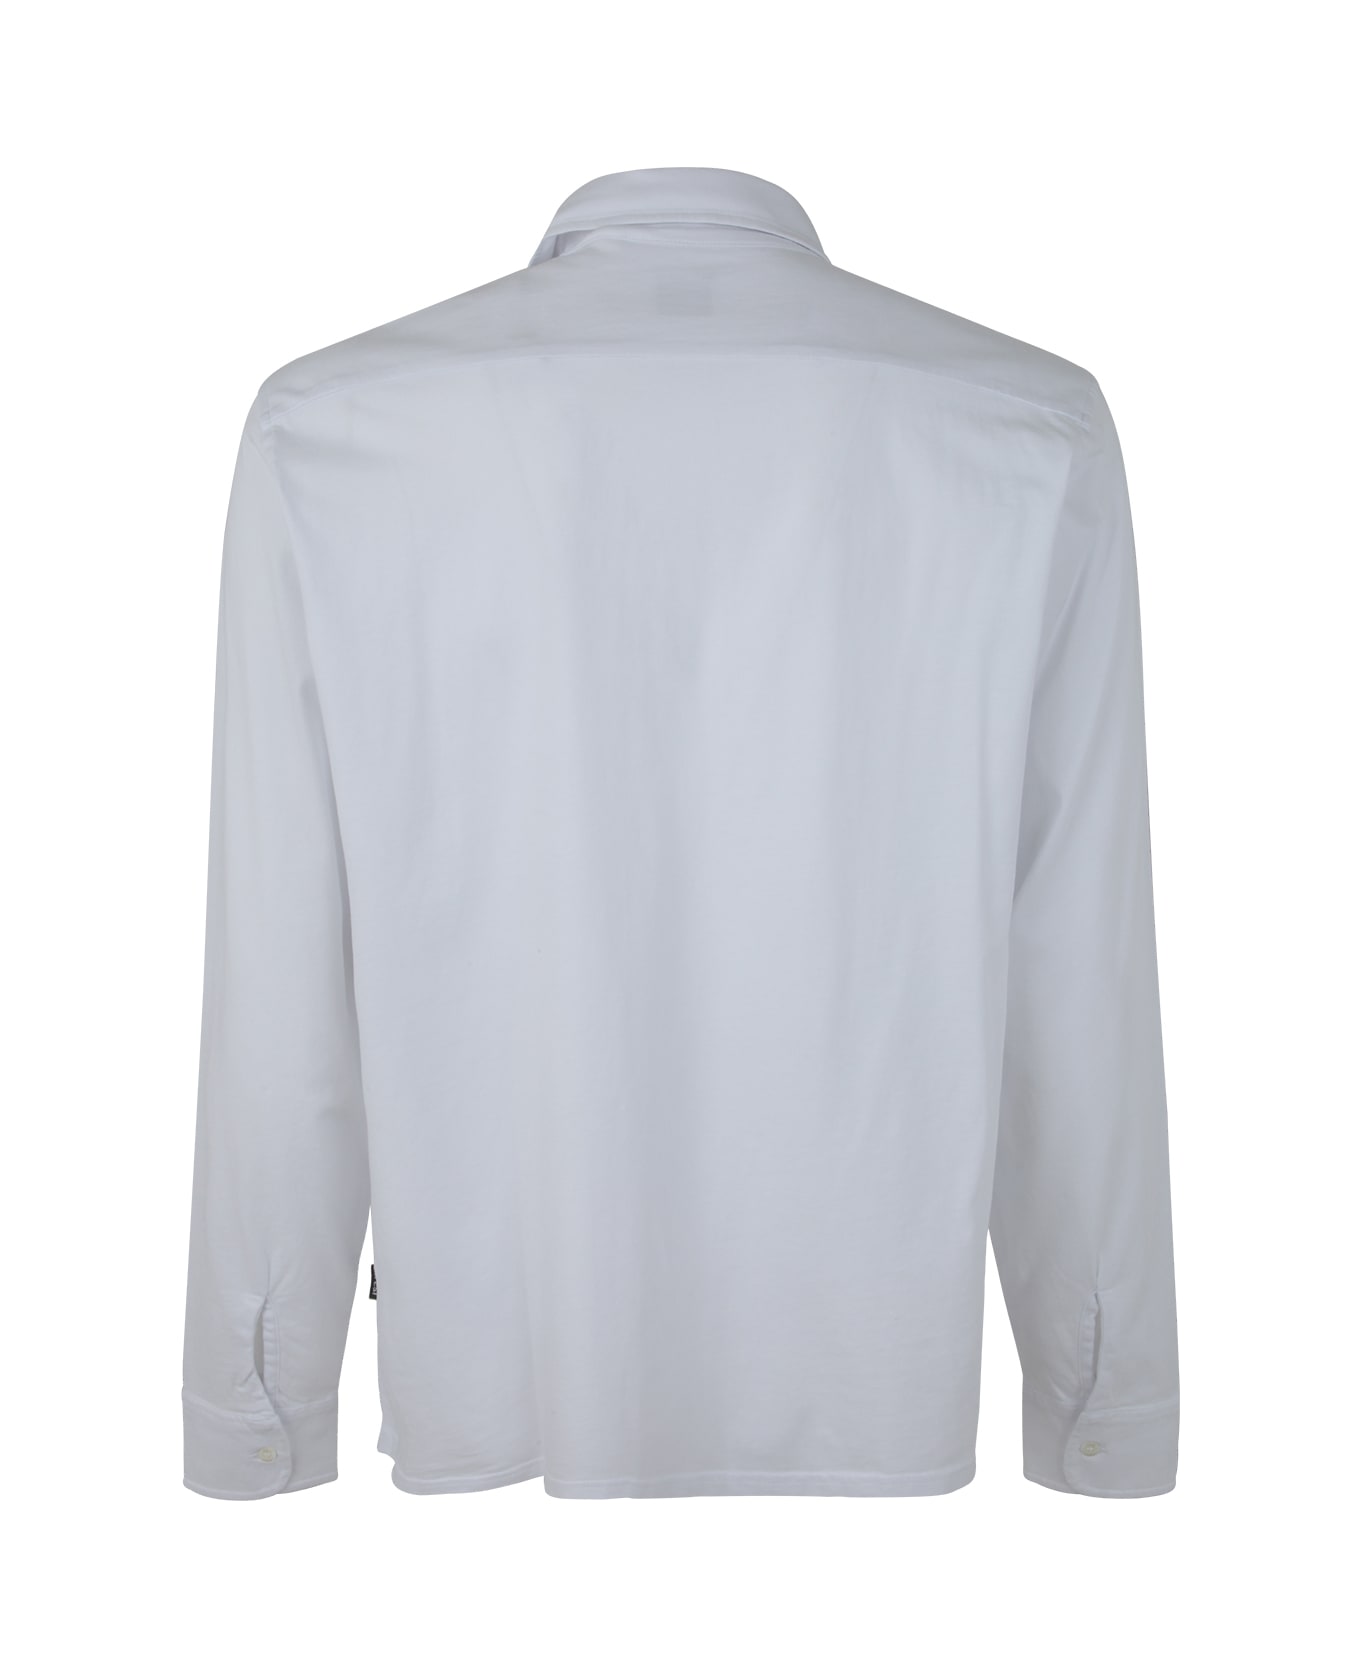 Aspesi Mod Ay34 Shirt - White